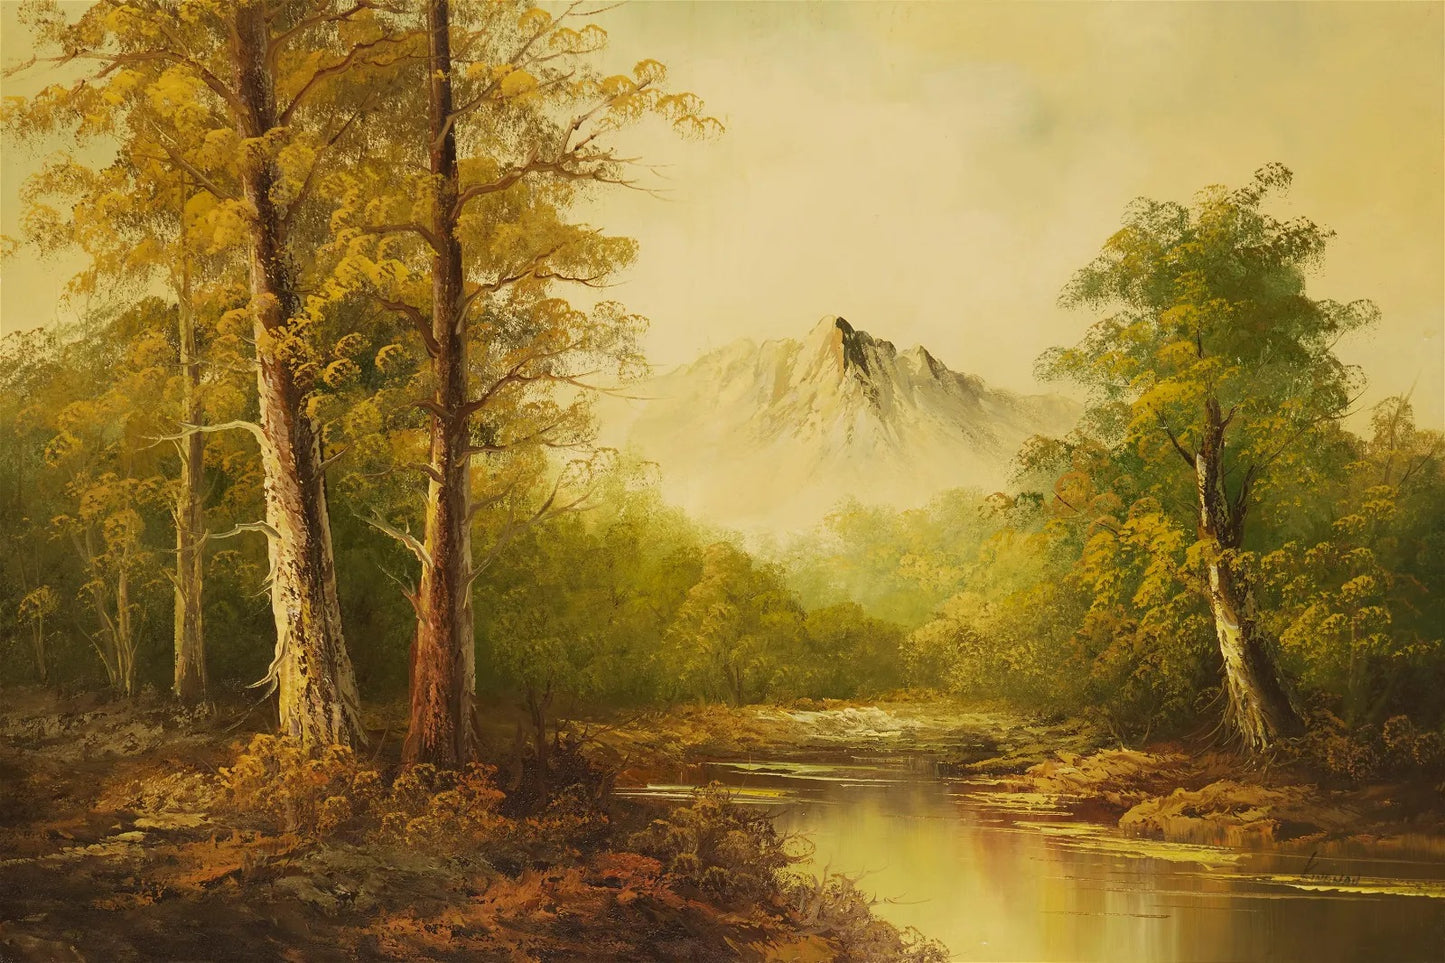 Eugene Kingman - A River in a Mountainous Landscape 24" x 36"